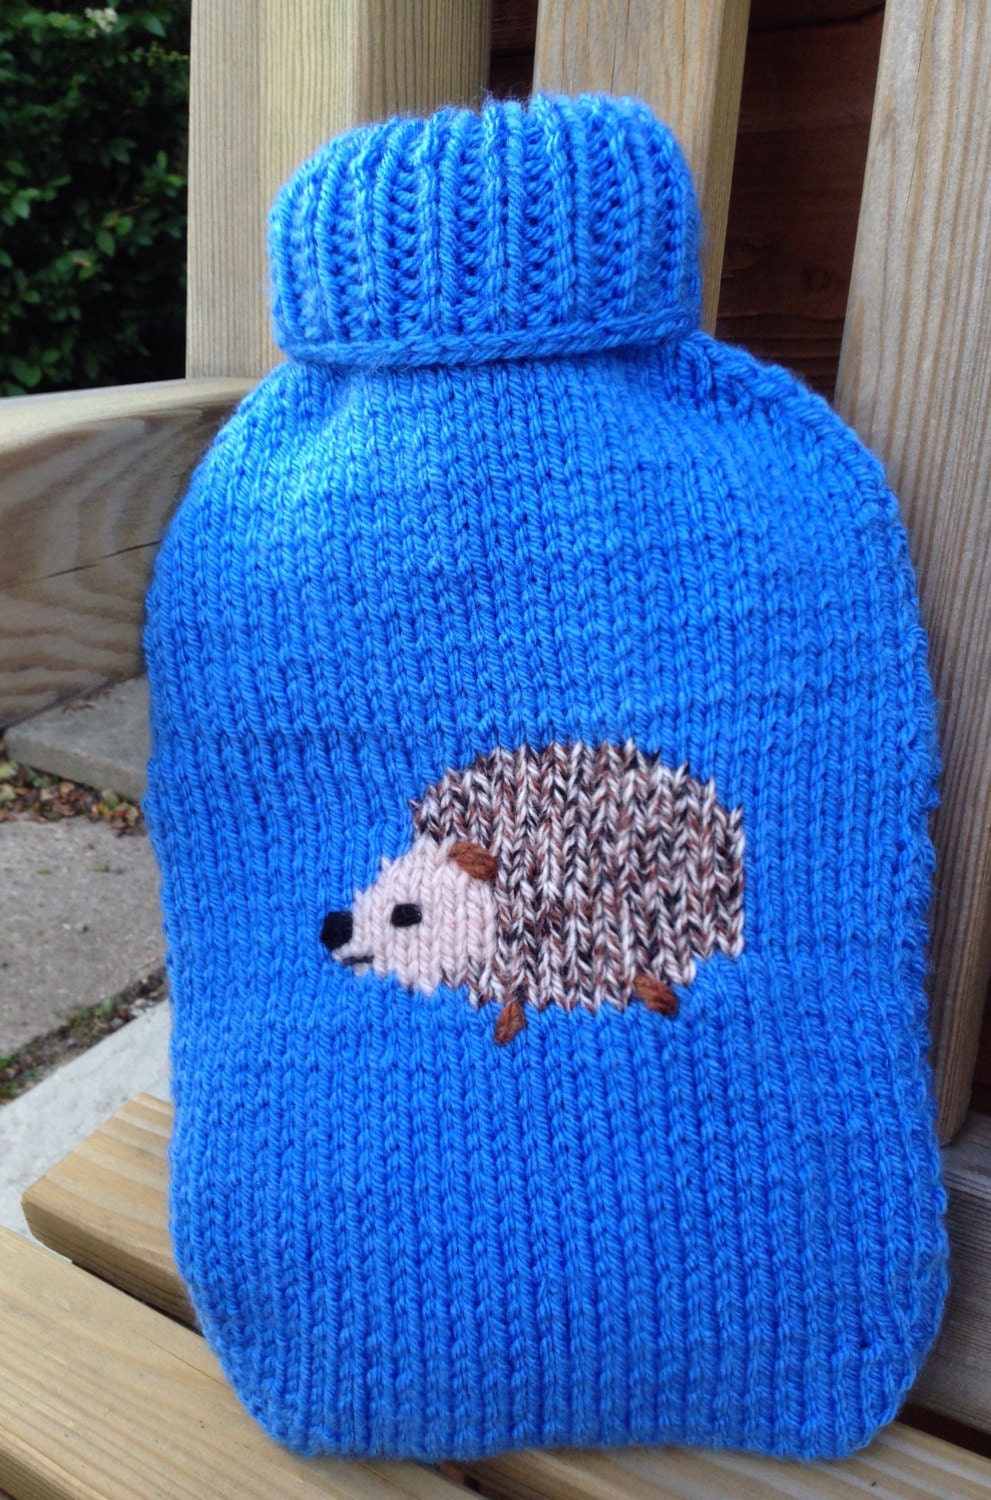 Hedgehog hot water bottle cover knitting pattern.